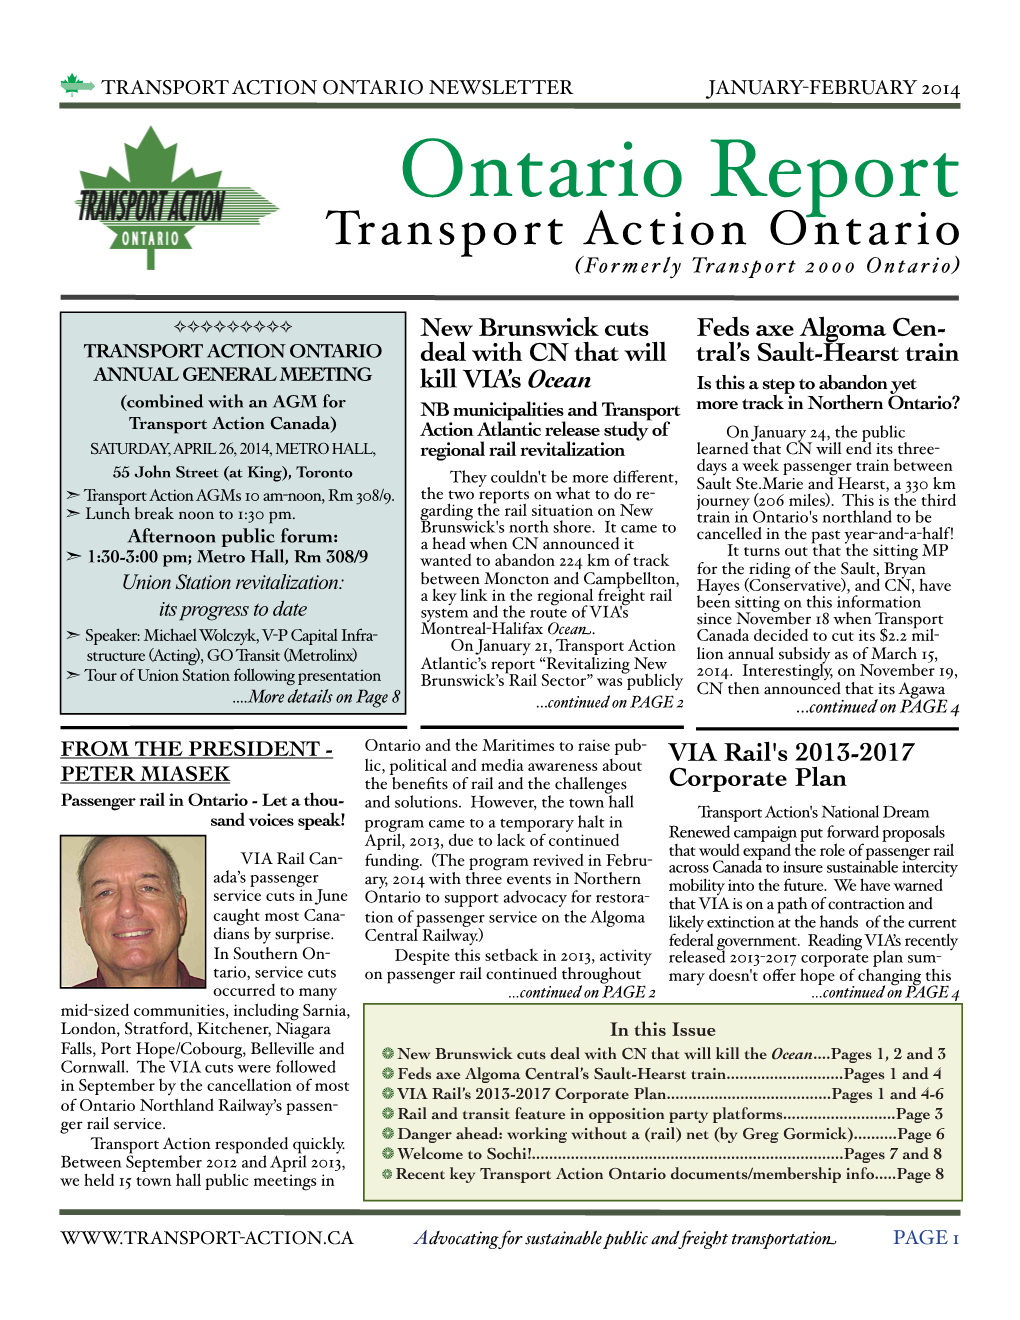 Transport Action Ontario Report 2014Janfeb